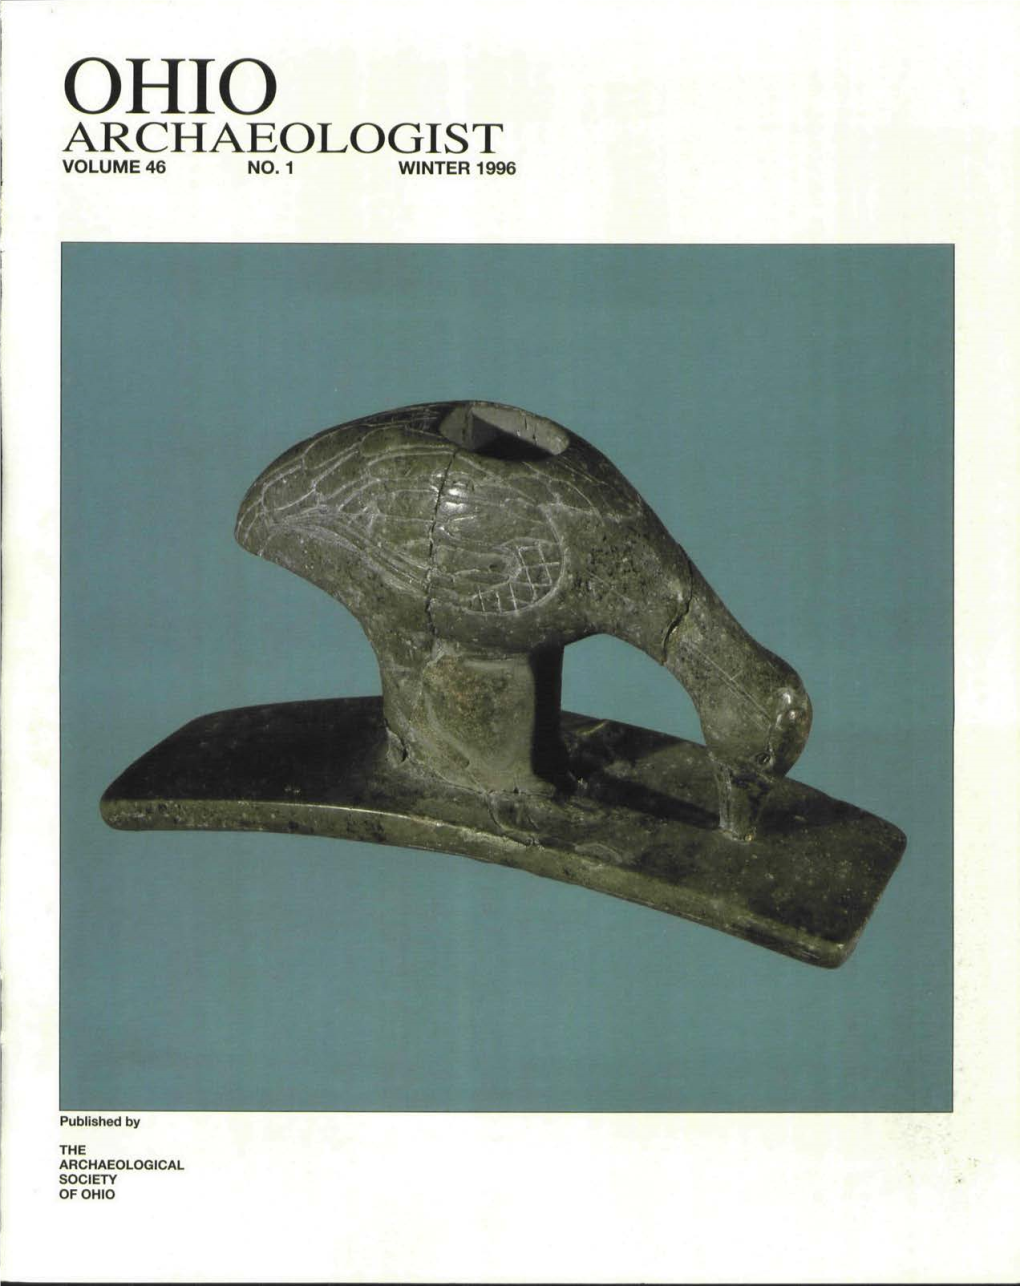 Archaeologist Volume 46 No